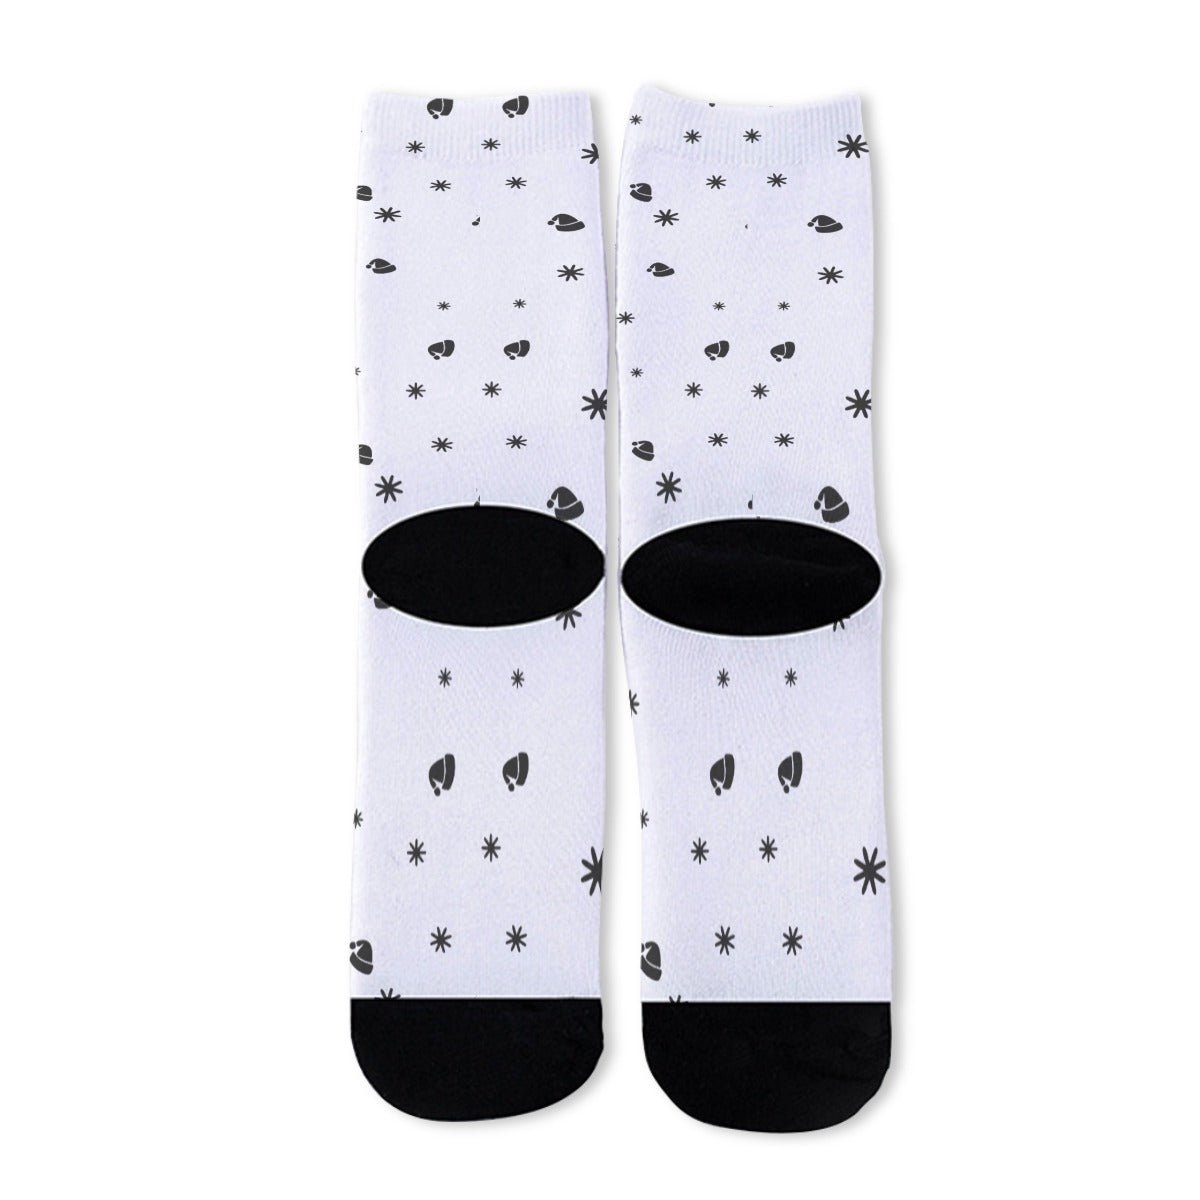 Unisex Long Socks - White - Hats and Snowflakes - Festive Style